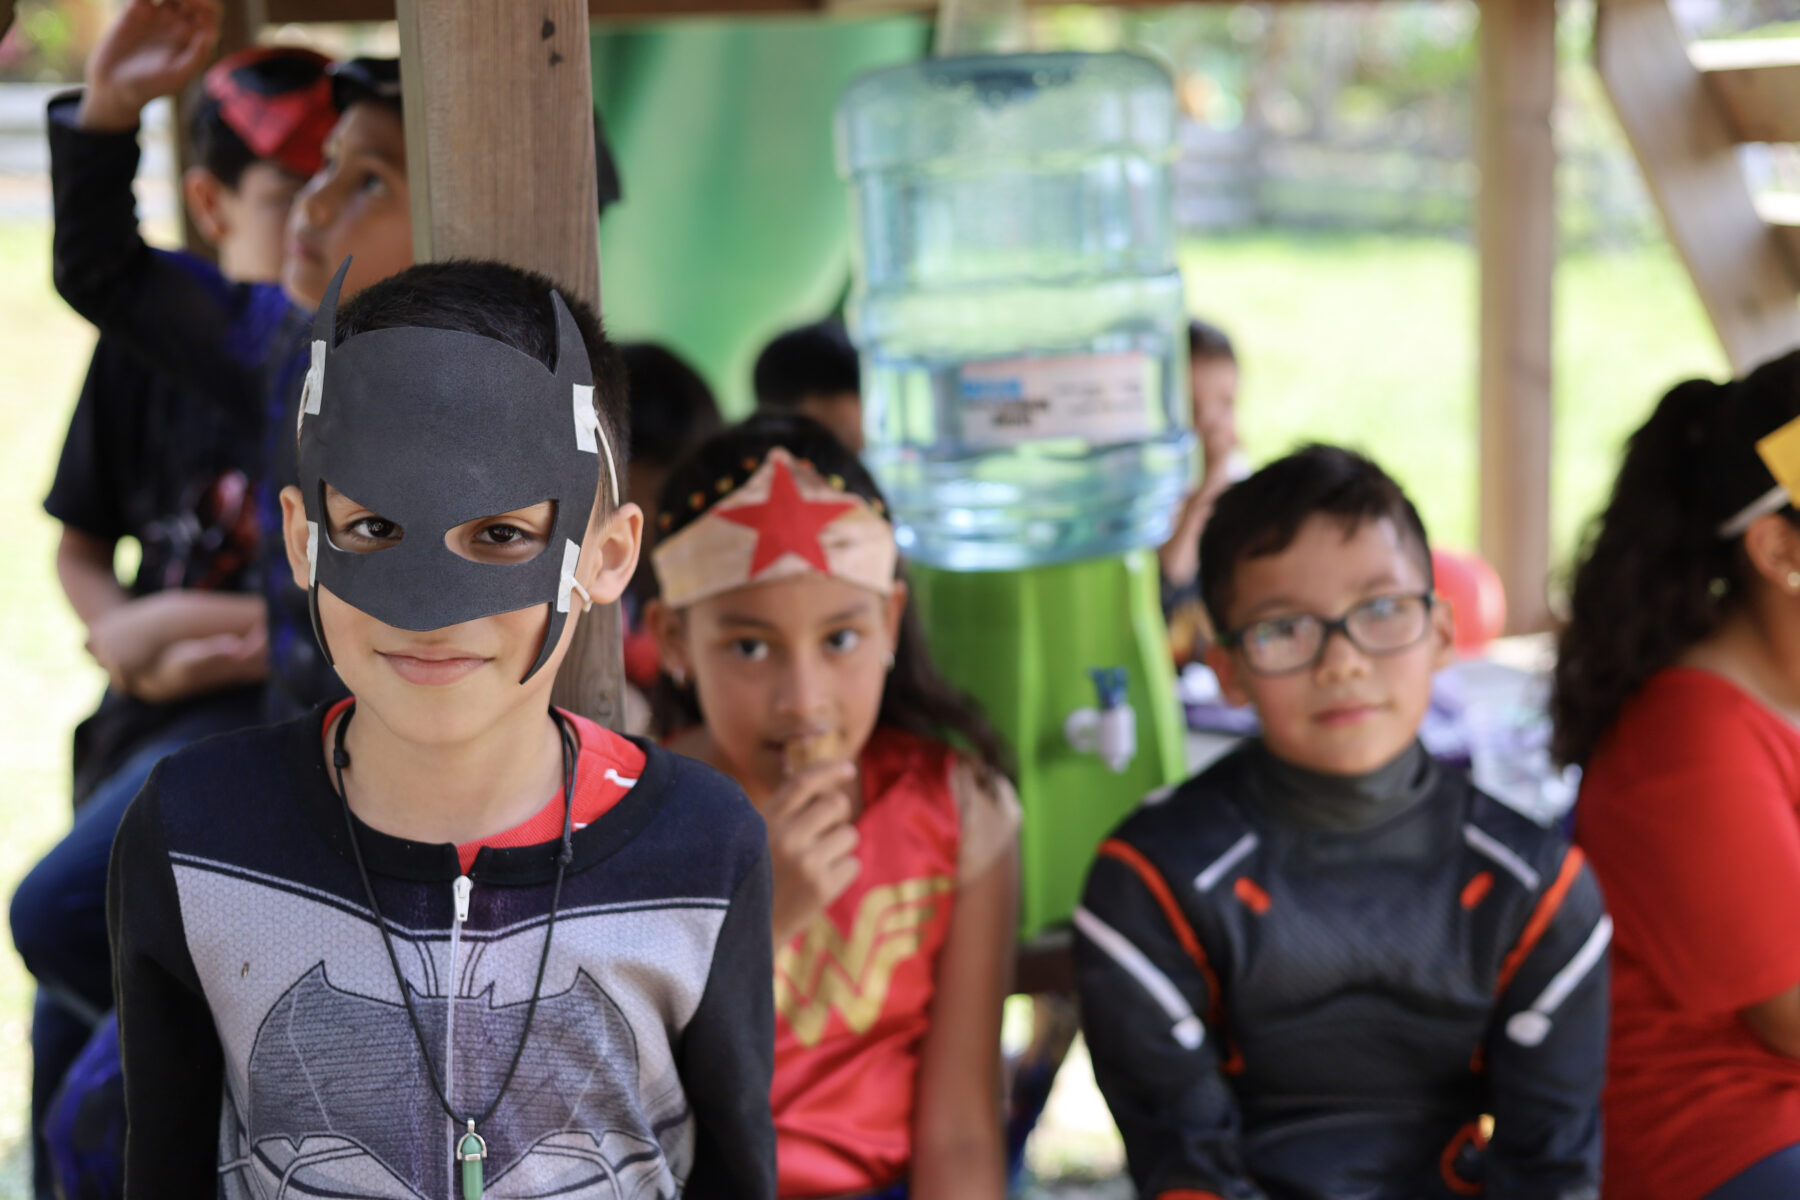 Three children in super hero costumes